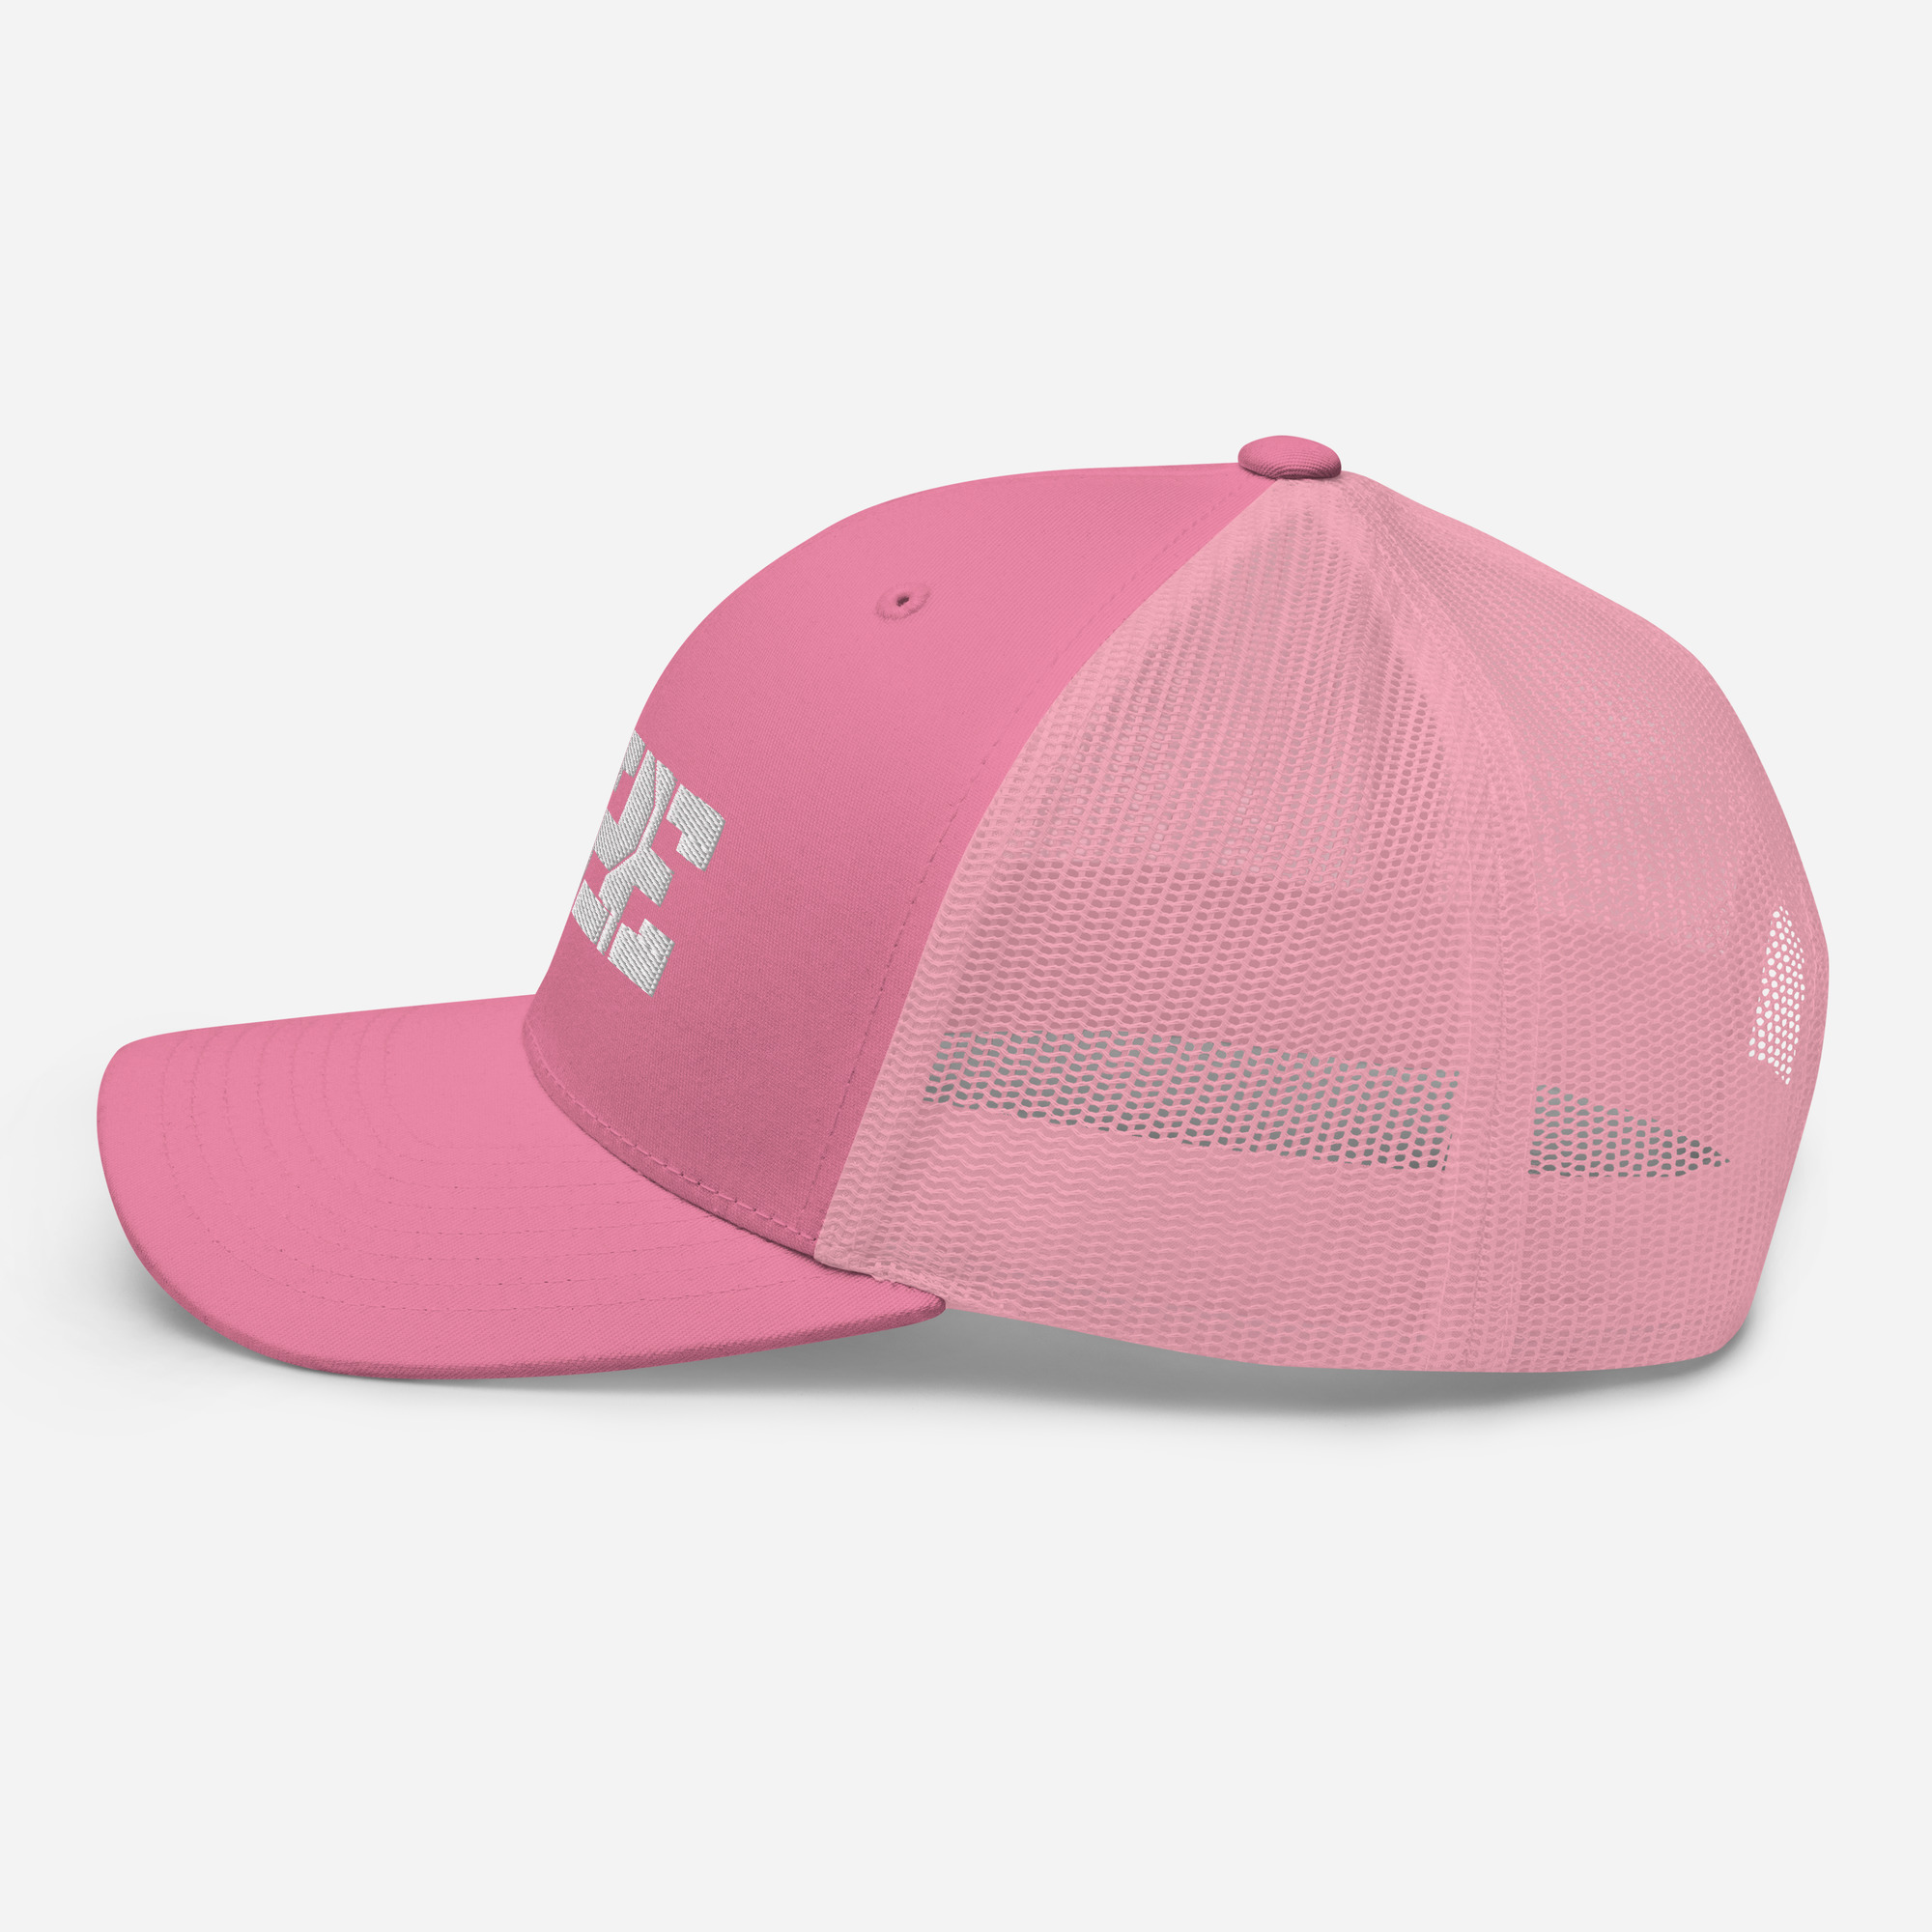 retro-trucker-hat-pink-left-6316911a2861a.jpg